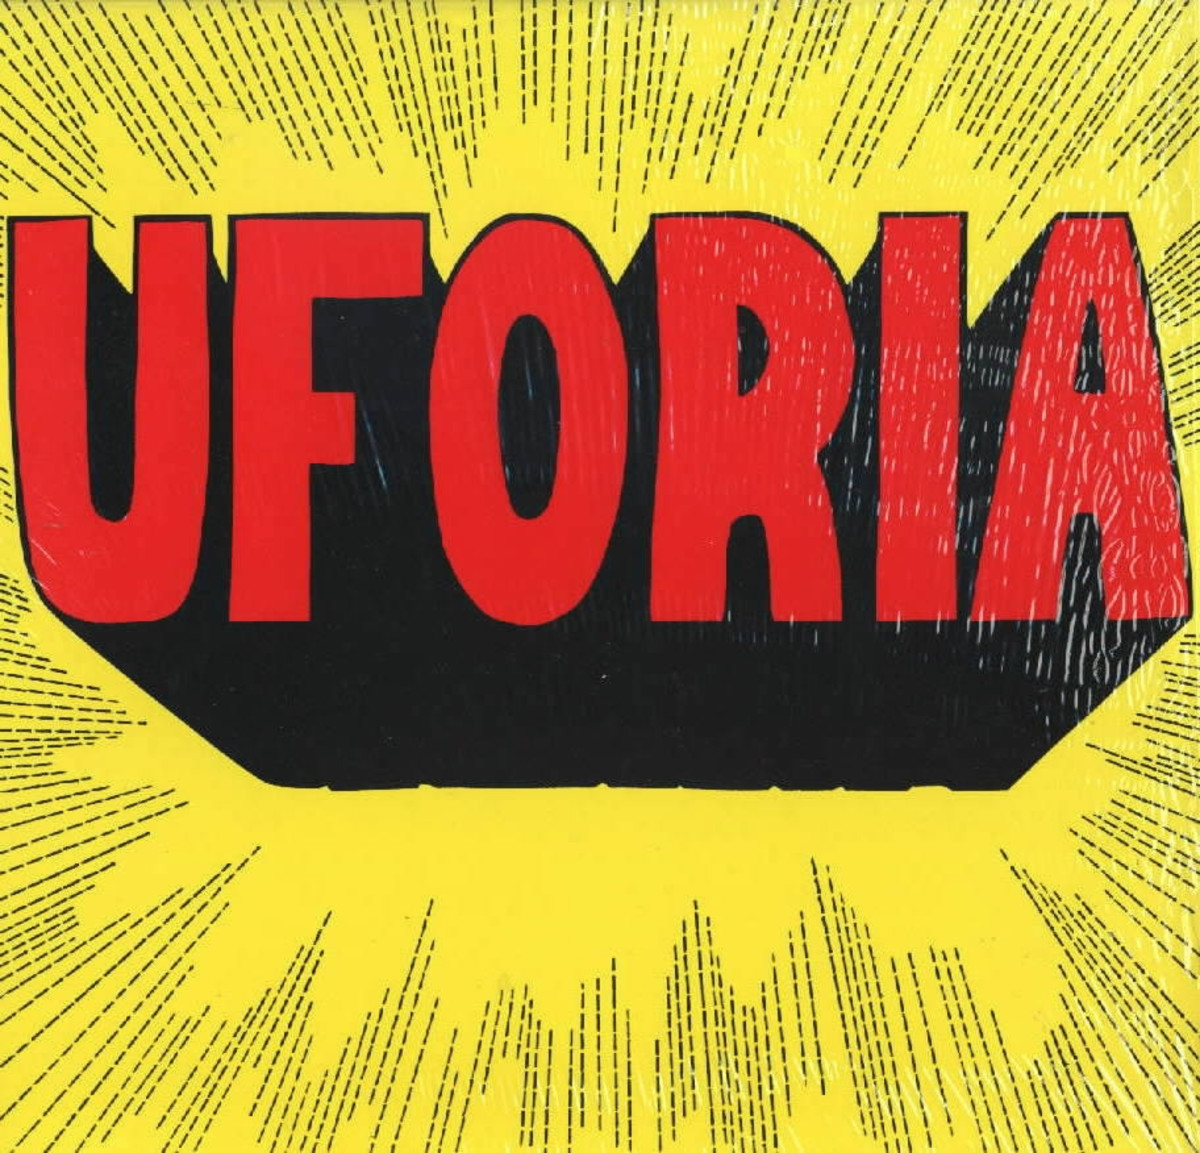 Uforia "Uforia" Private Pressing 12" LP Vinyl Record (1980)